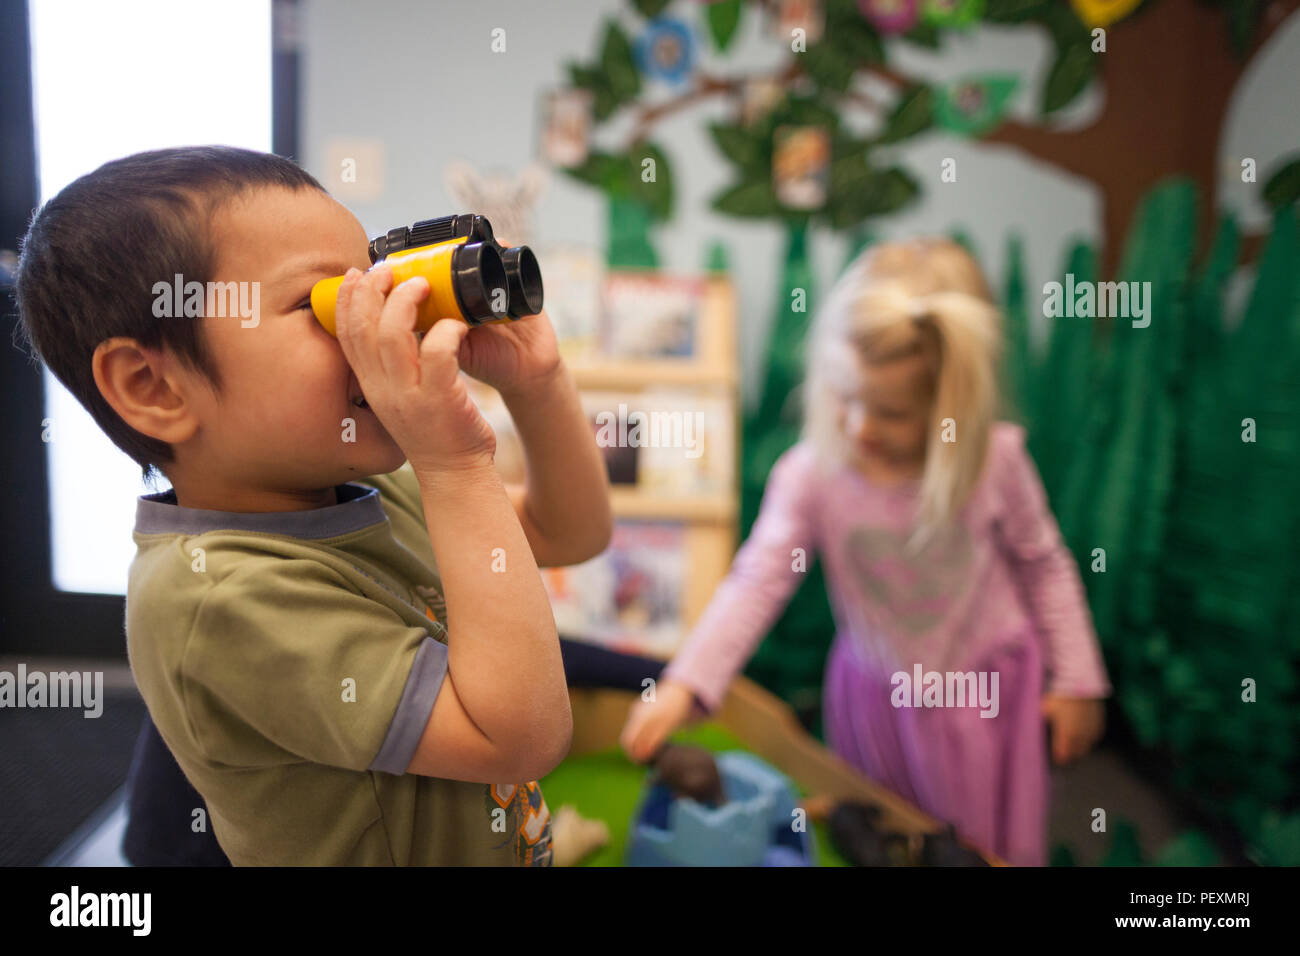 Boy using toy binoculars in classroom Stock Photo